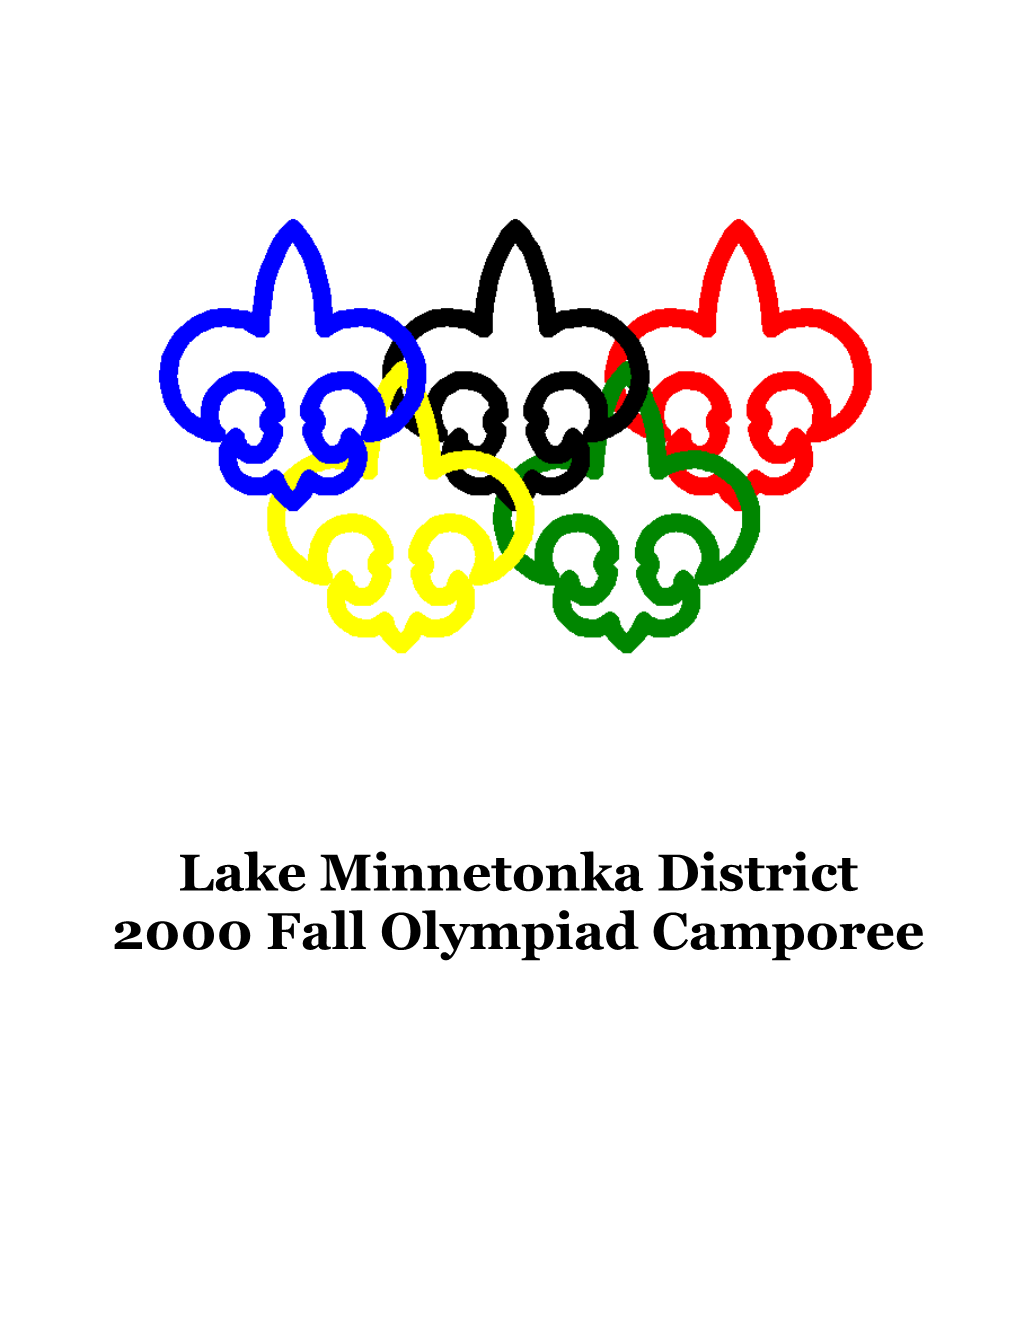 Lake Minnetonka District Fall Camporee Meeting